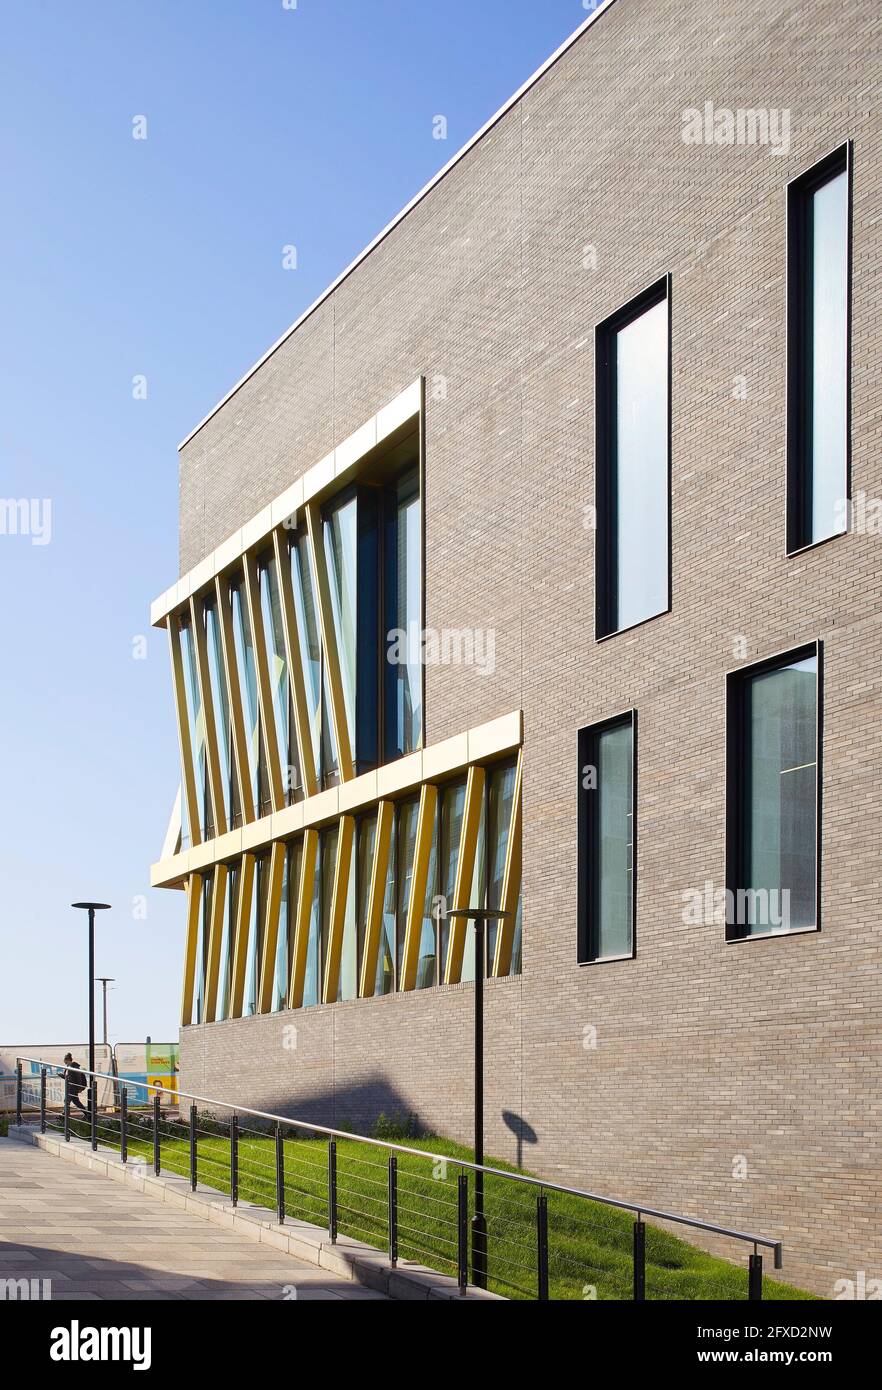 Perspective of brick facade and landscaping. University of Birmingham, Collaborative Teaching Laboratory, Birmingham, United Kingdom. Architect: Shepp Stock Photo